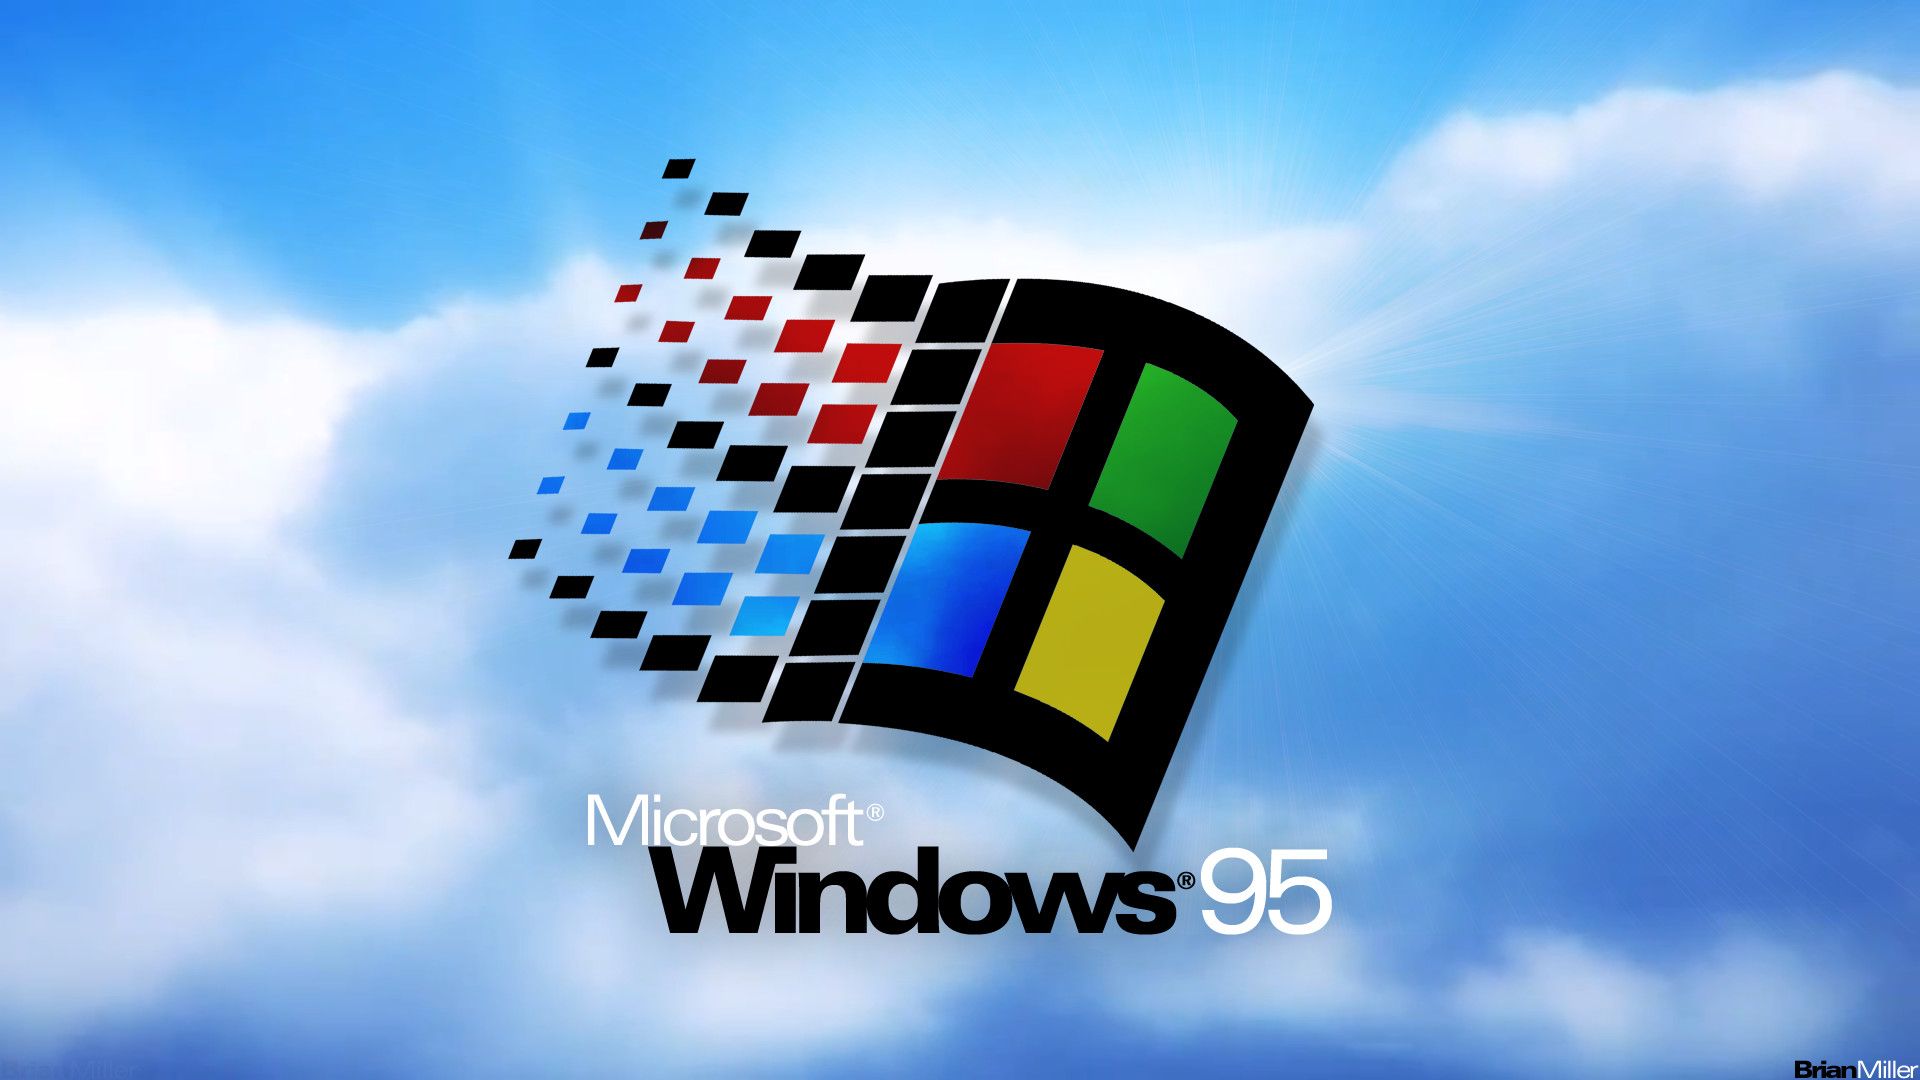 Windows 95 wallpaper, 1995, the last version of Windows 95, the end of the 90s, nostalgic wallpaper, Windows 95 logo, blue sky, white clouds, nostalgic wallpaper, 1920x1080, #12911 - Windows 95